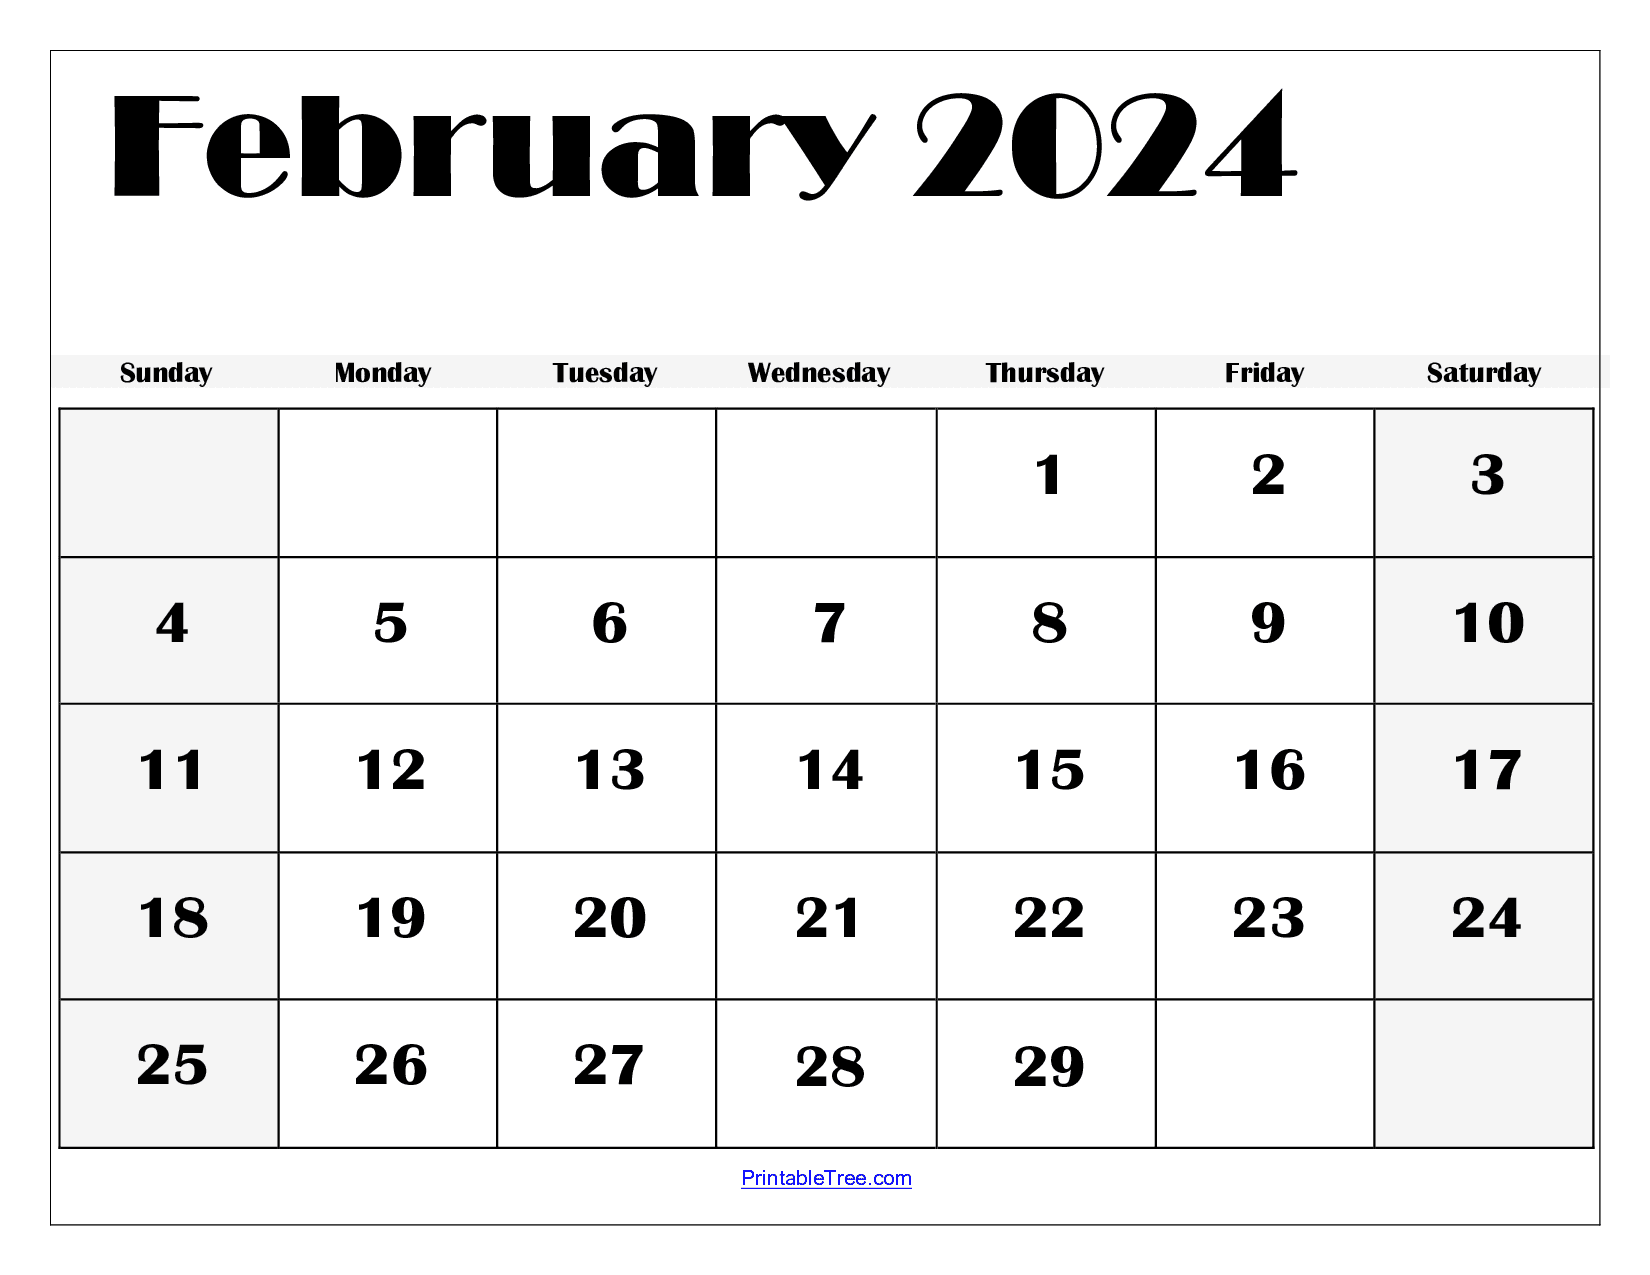 February 2024 Calendar Large Print Lula Sindee - Free Printable 2024 Calendar With Big Numbers